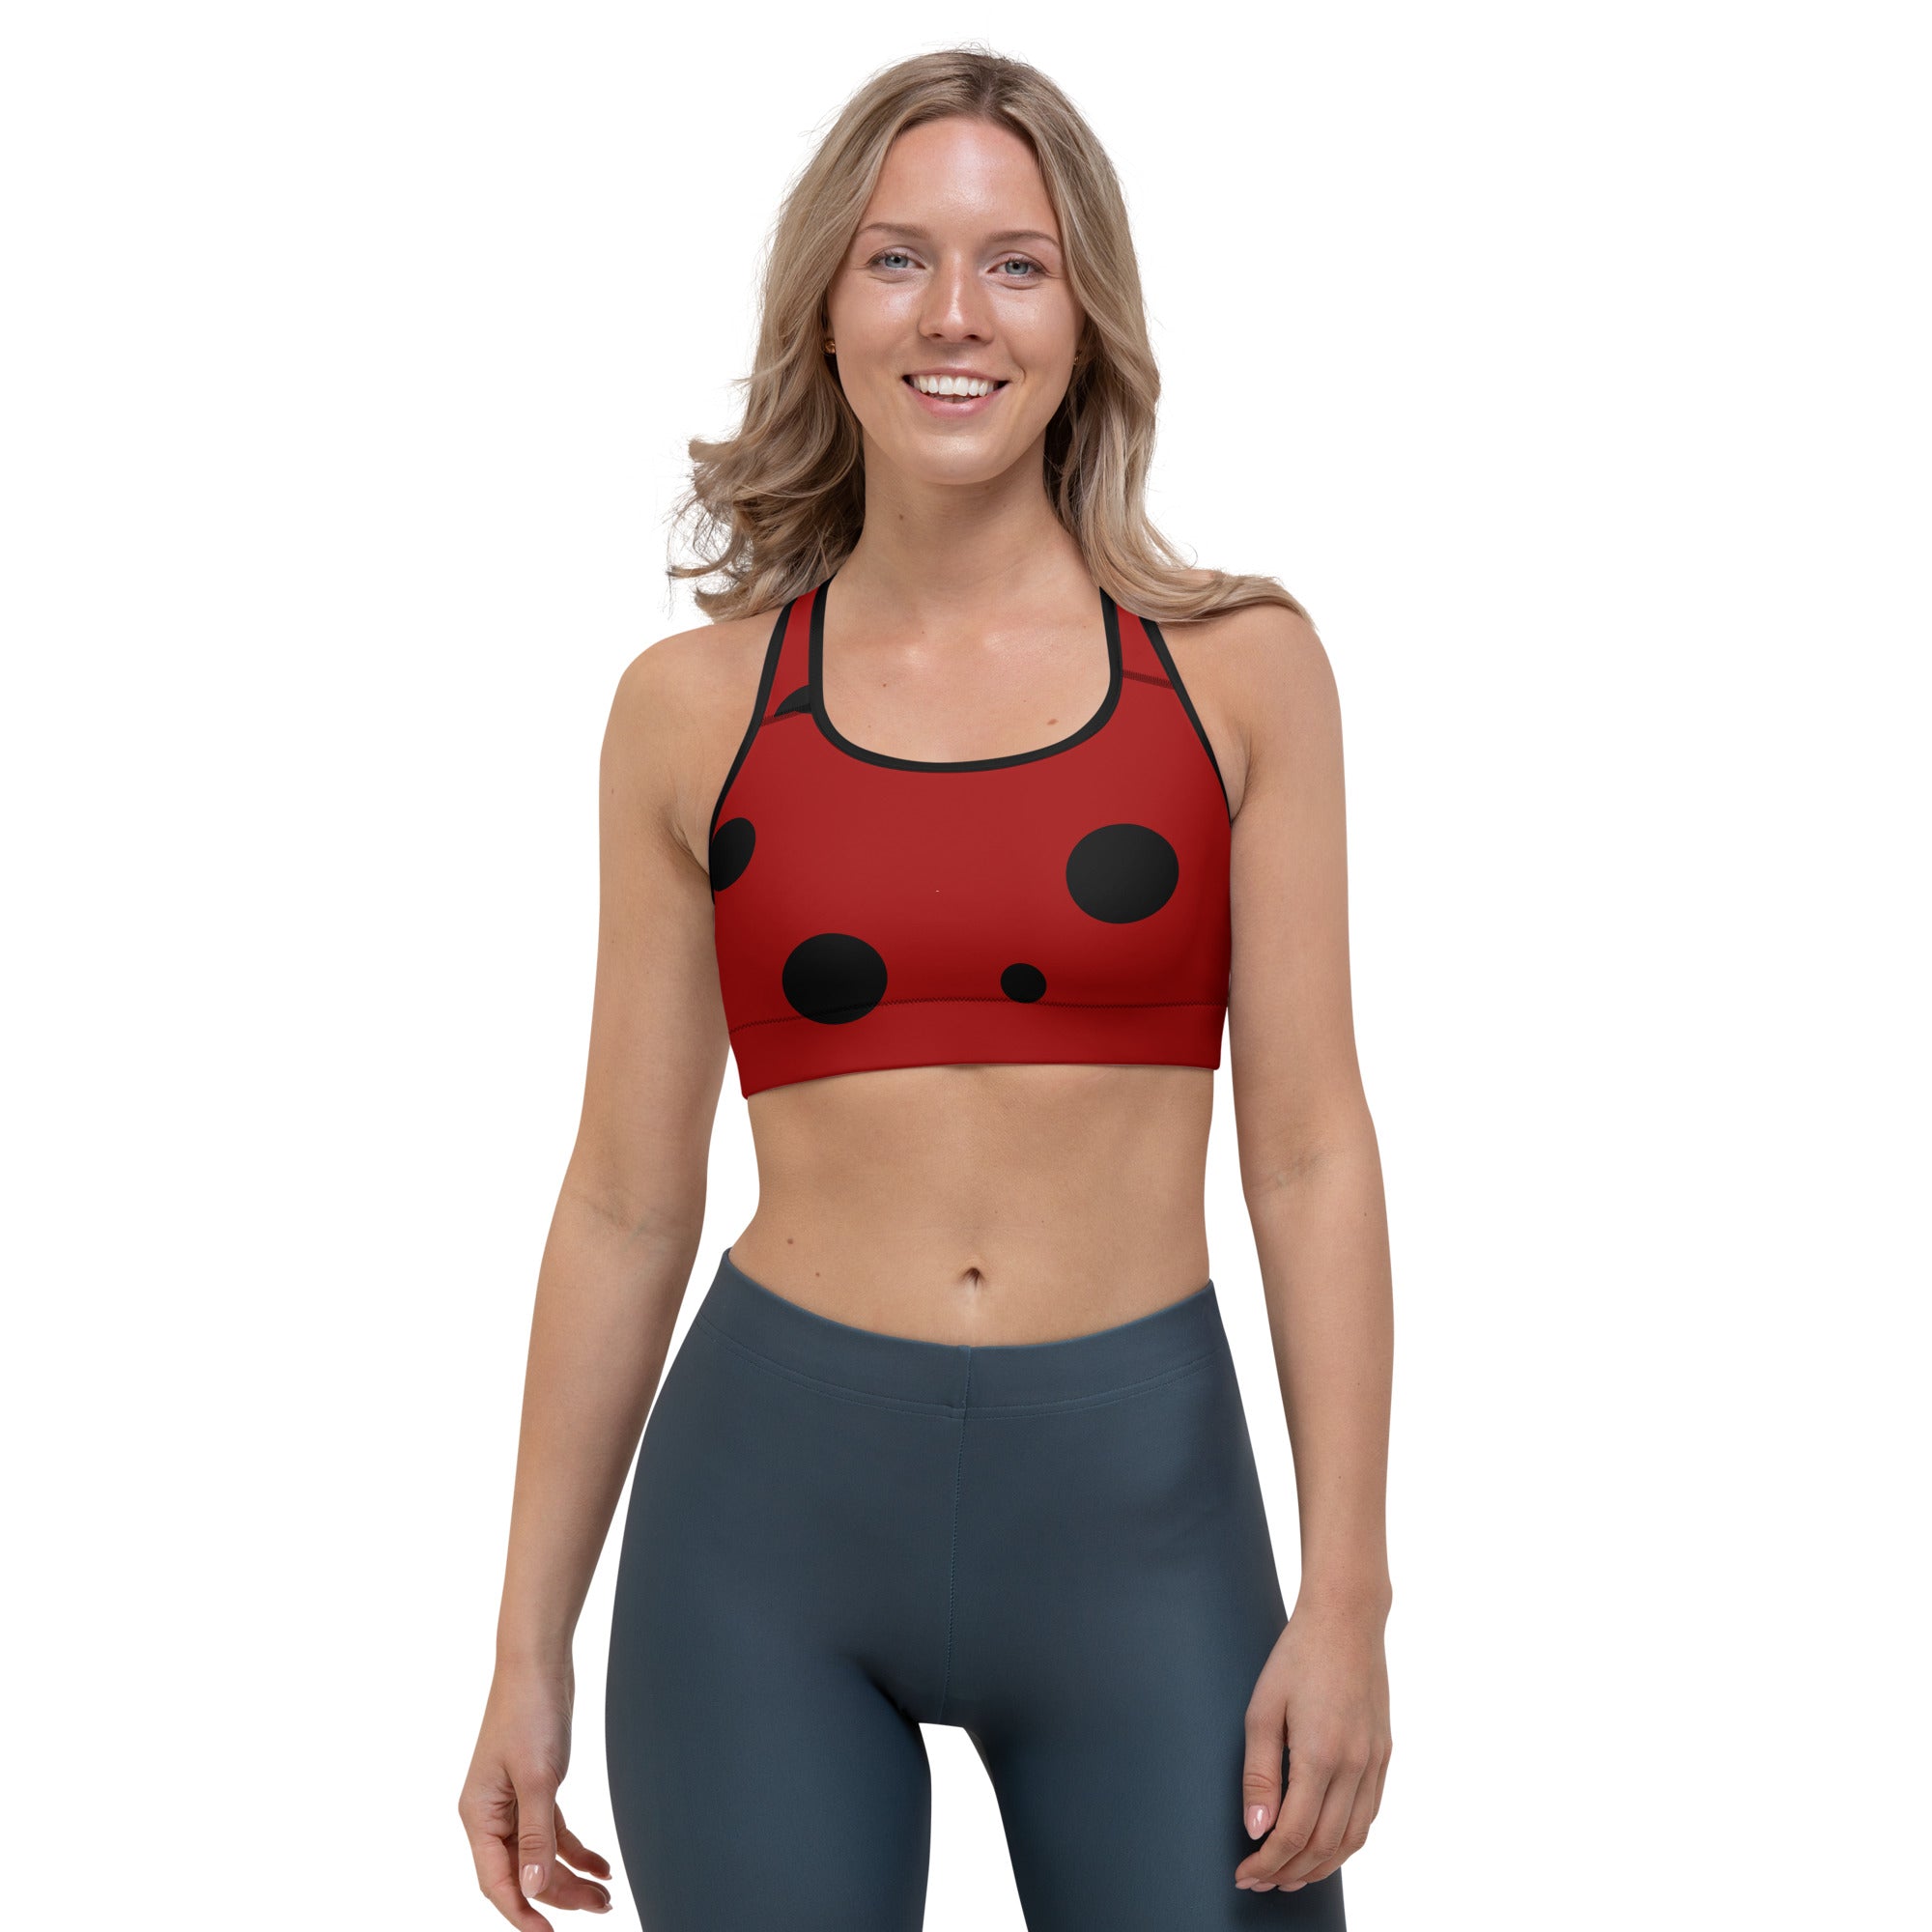 Ladybug Sports Bra